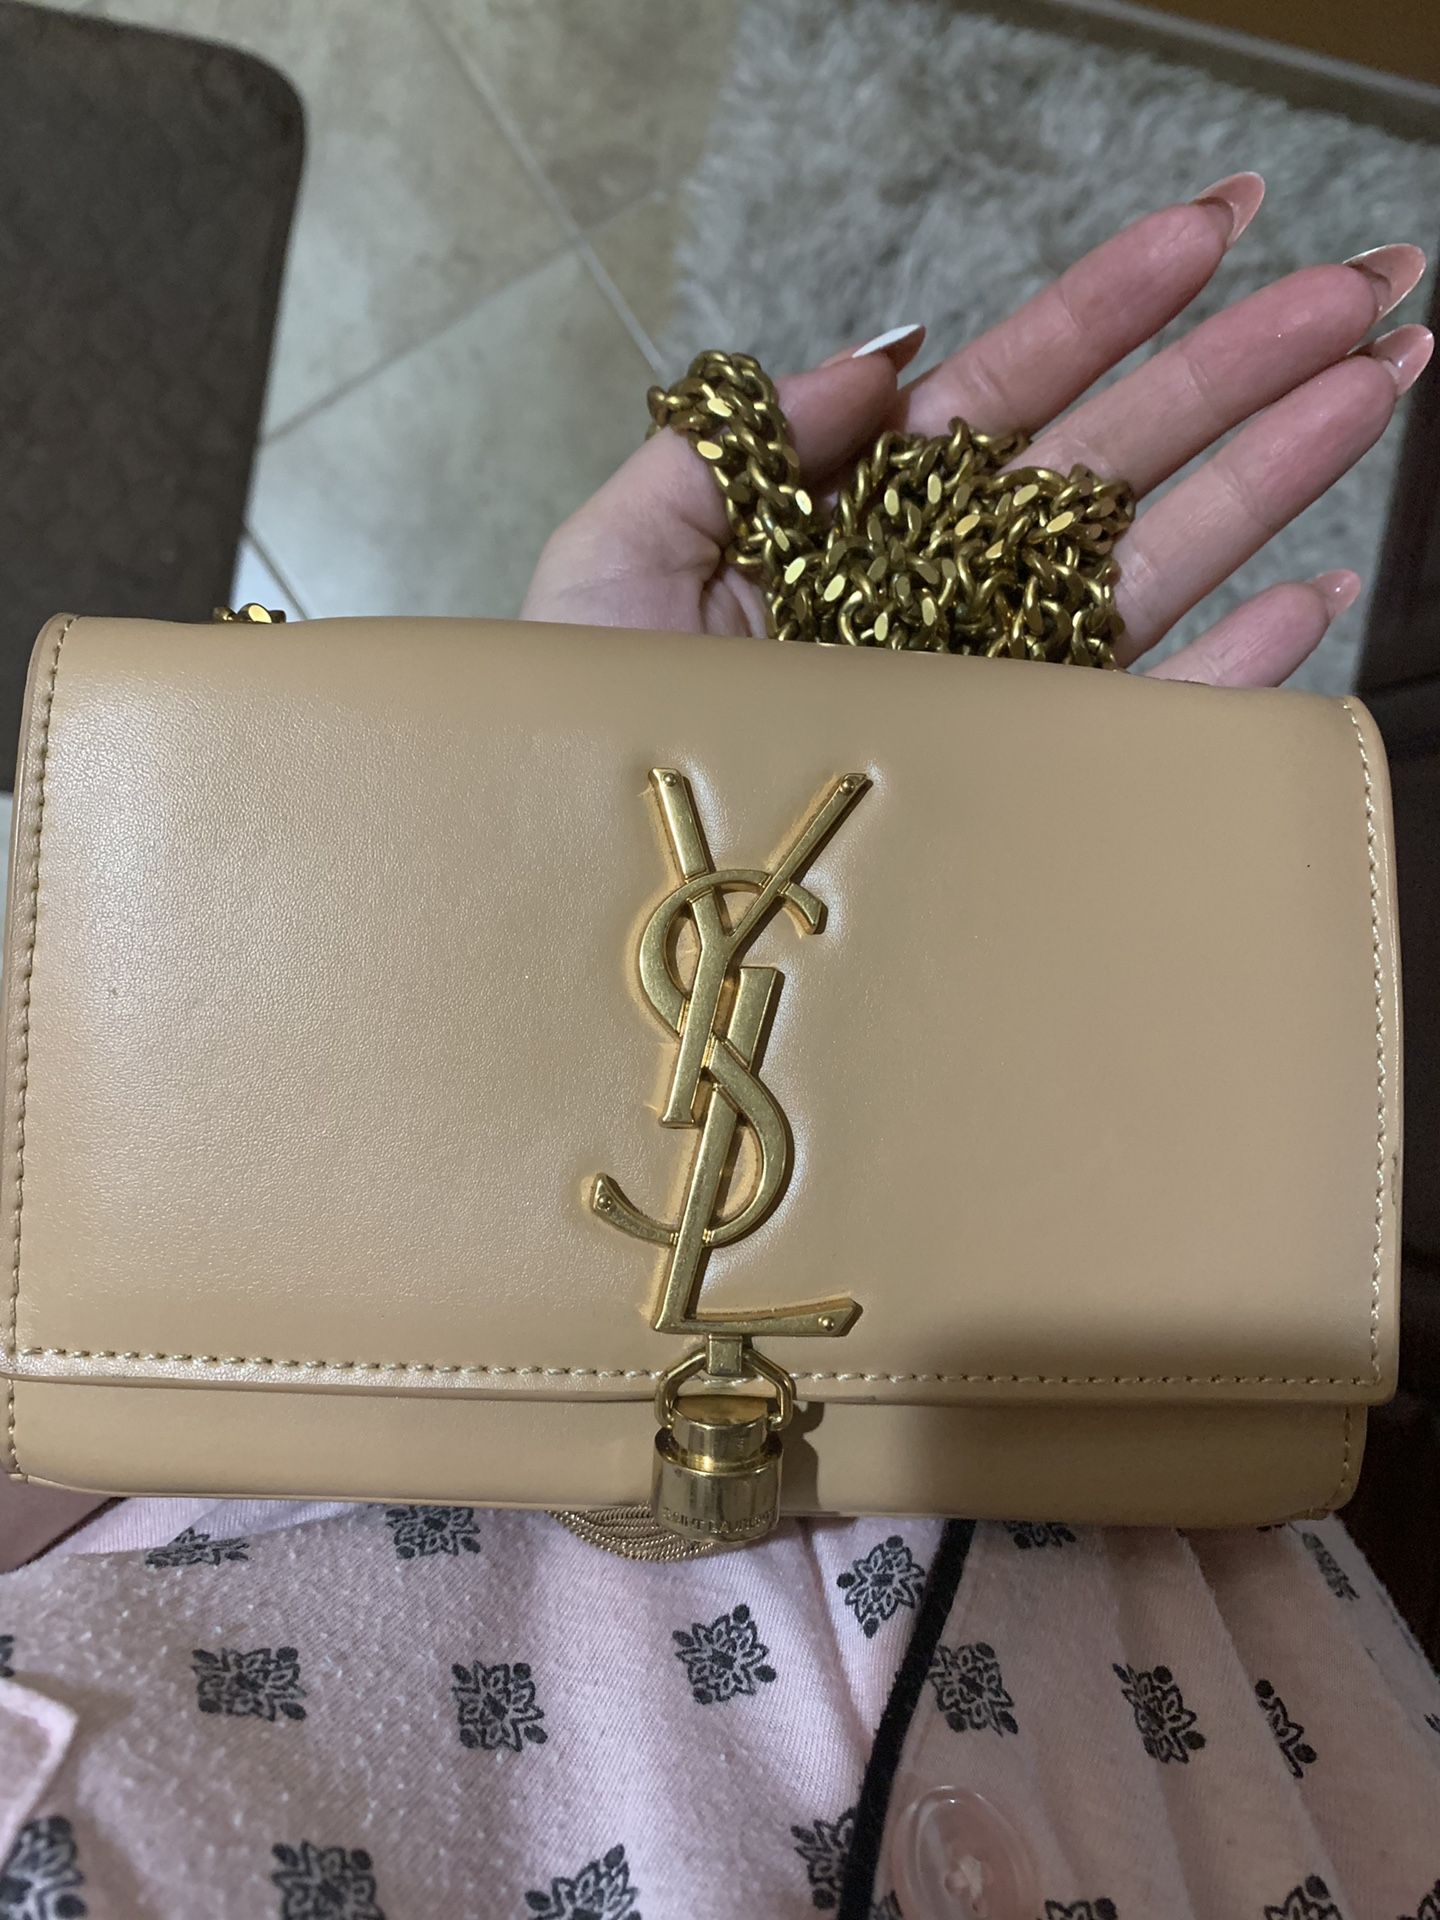 Yves Saint Laurent purses